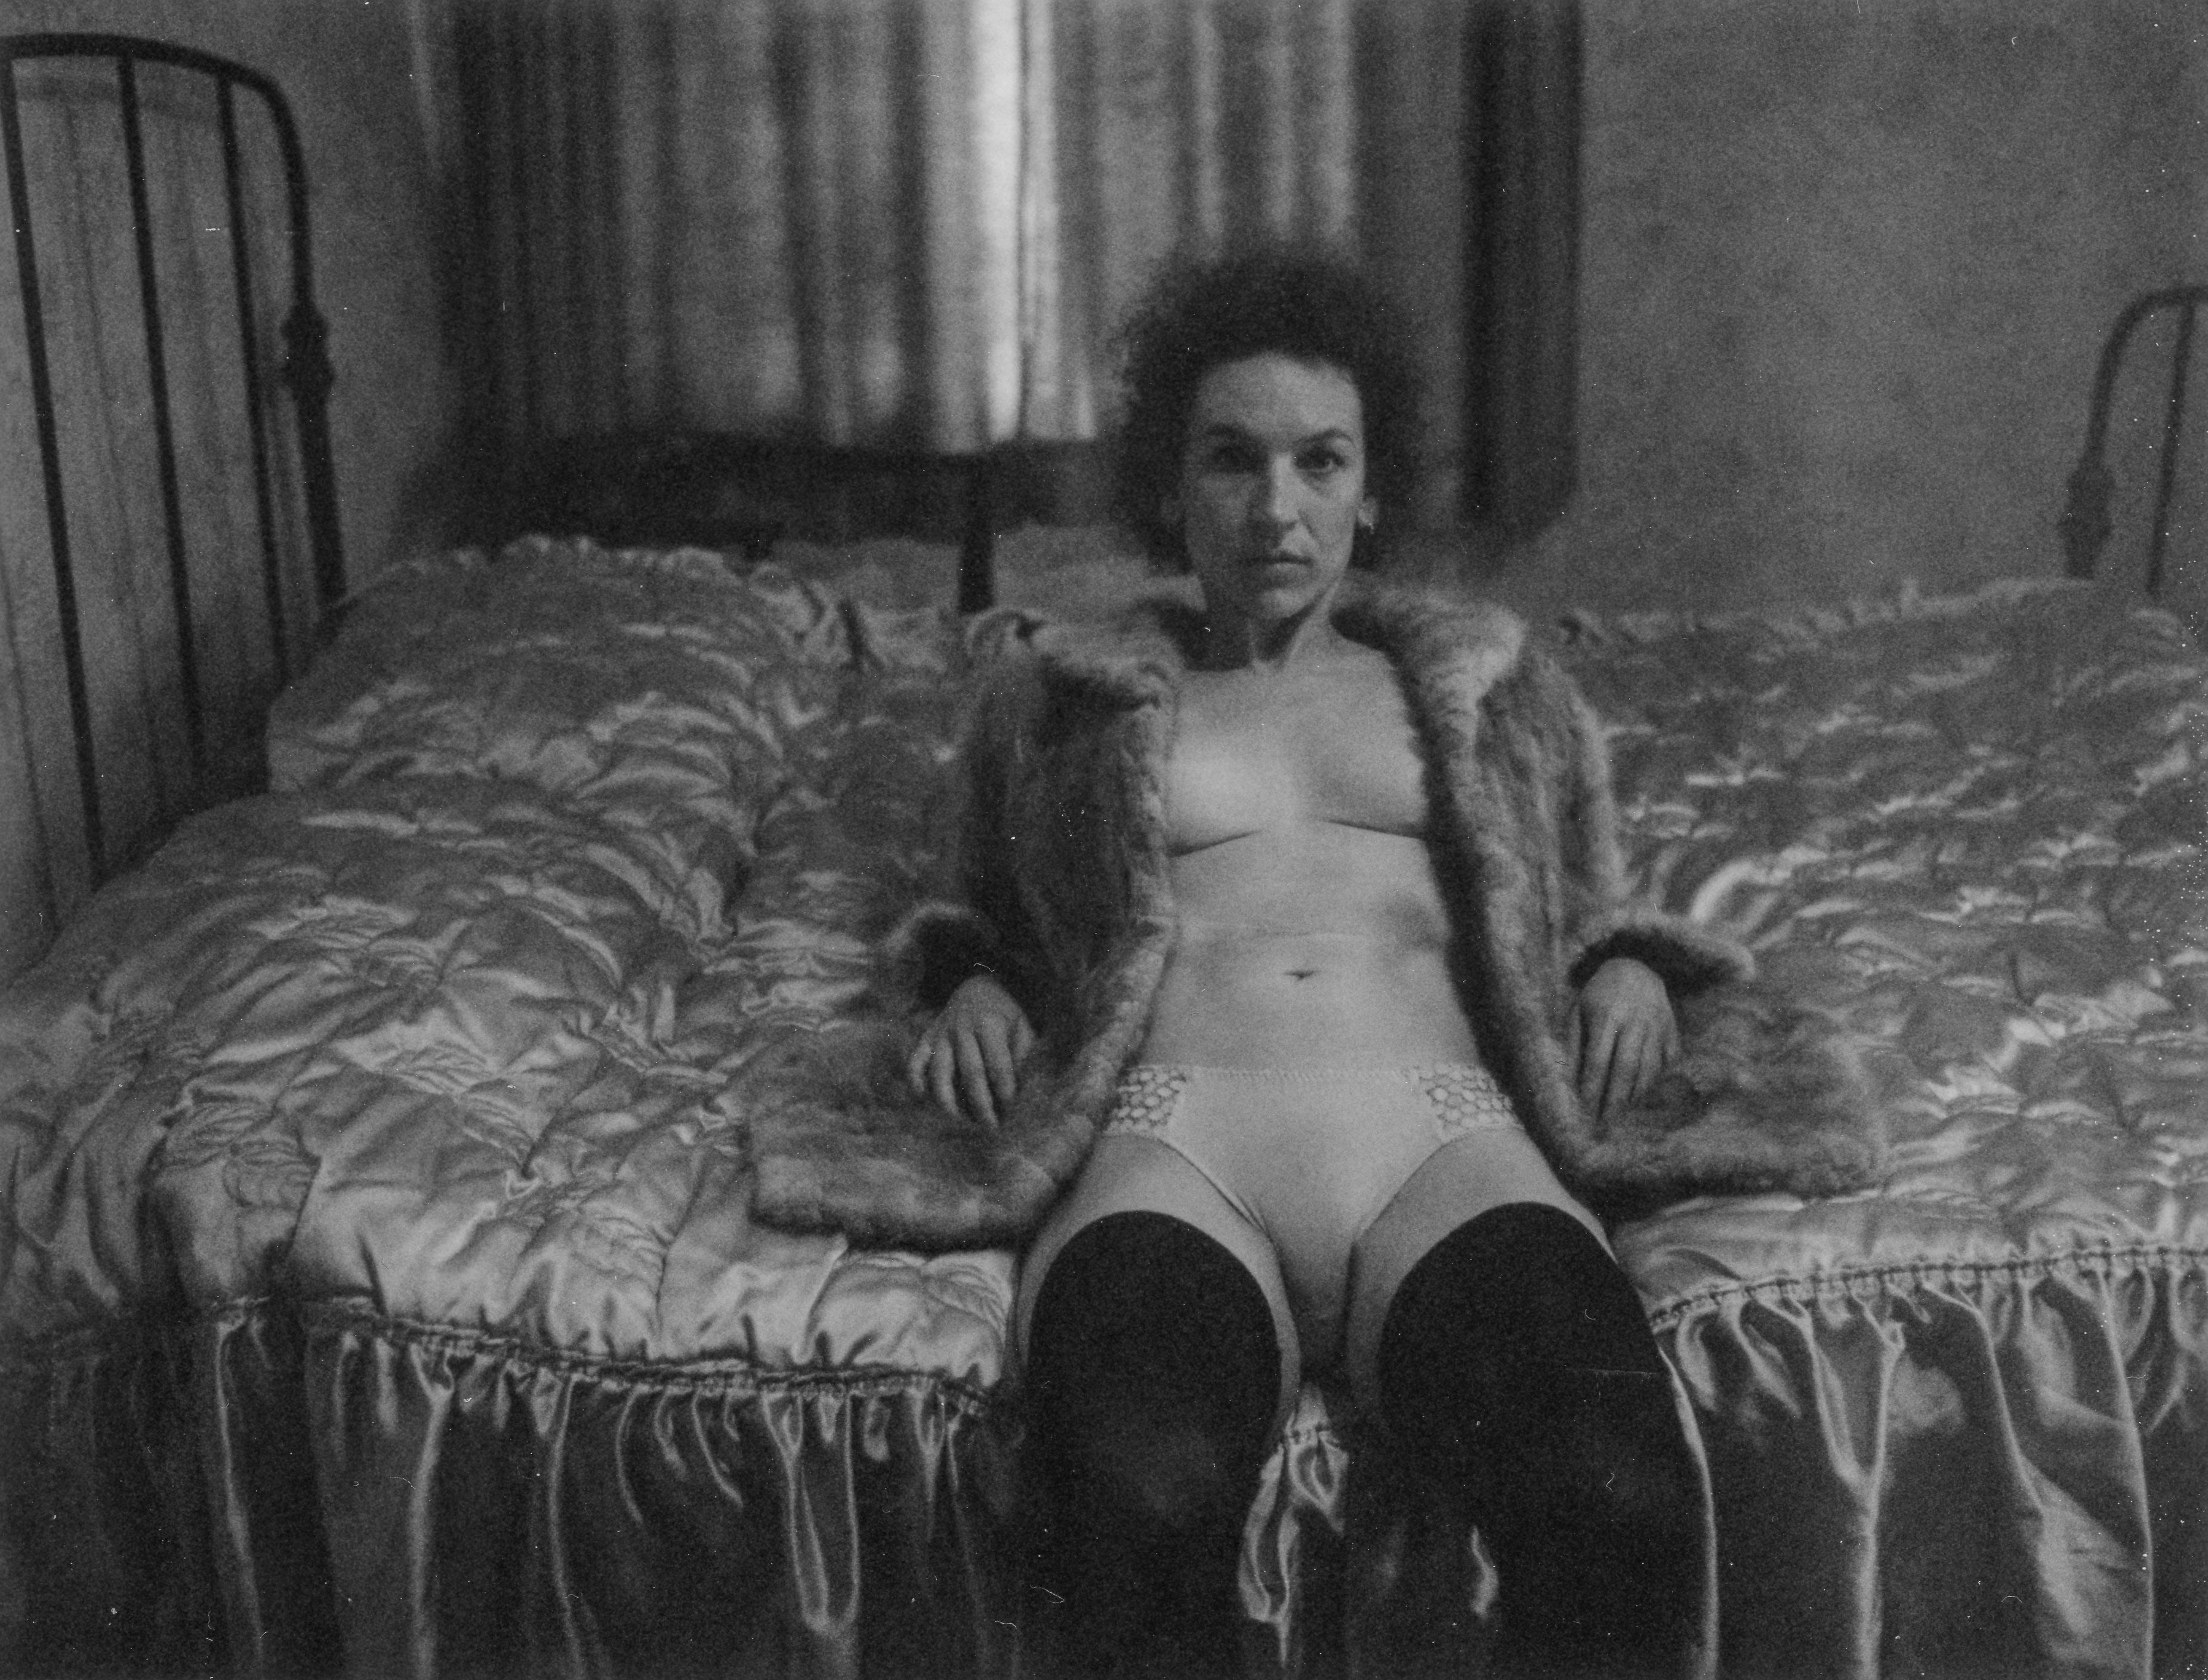 Kirsten Thys van den Audenaerde Nude Photograph - Madam X - Contemporary, Nude, Women, Polaroid, 21st Century